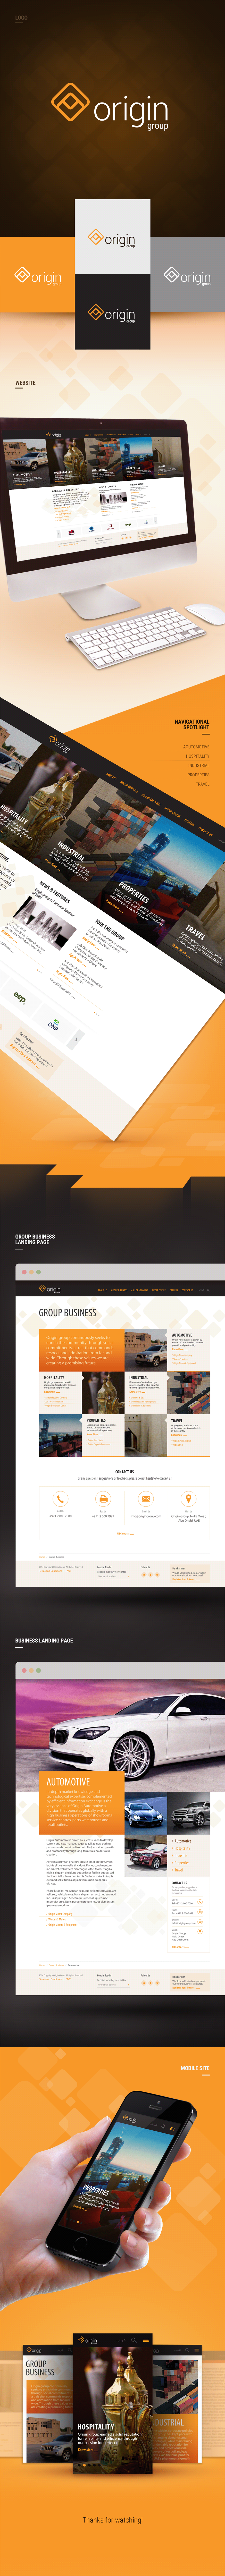 Website Mobilesite UI ux Logo Design mobile Web desktop graphic orange tablet Responsive Design